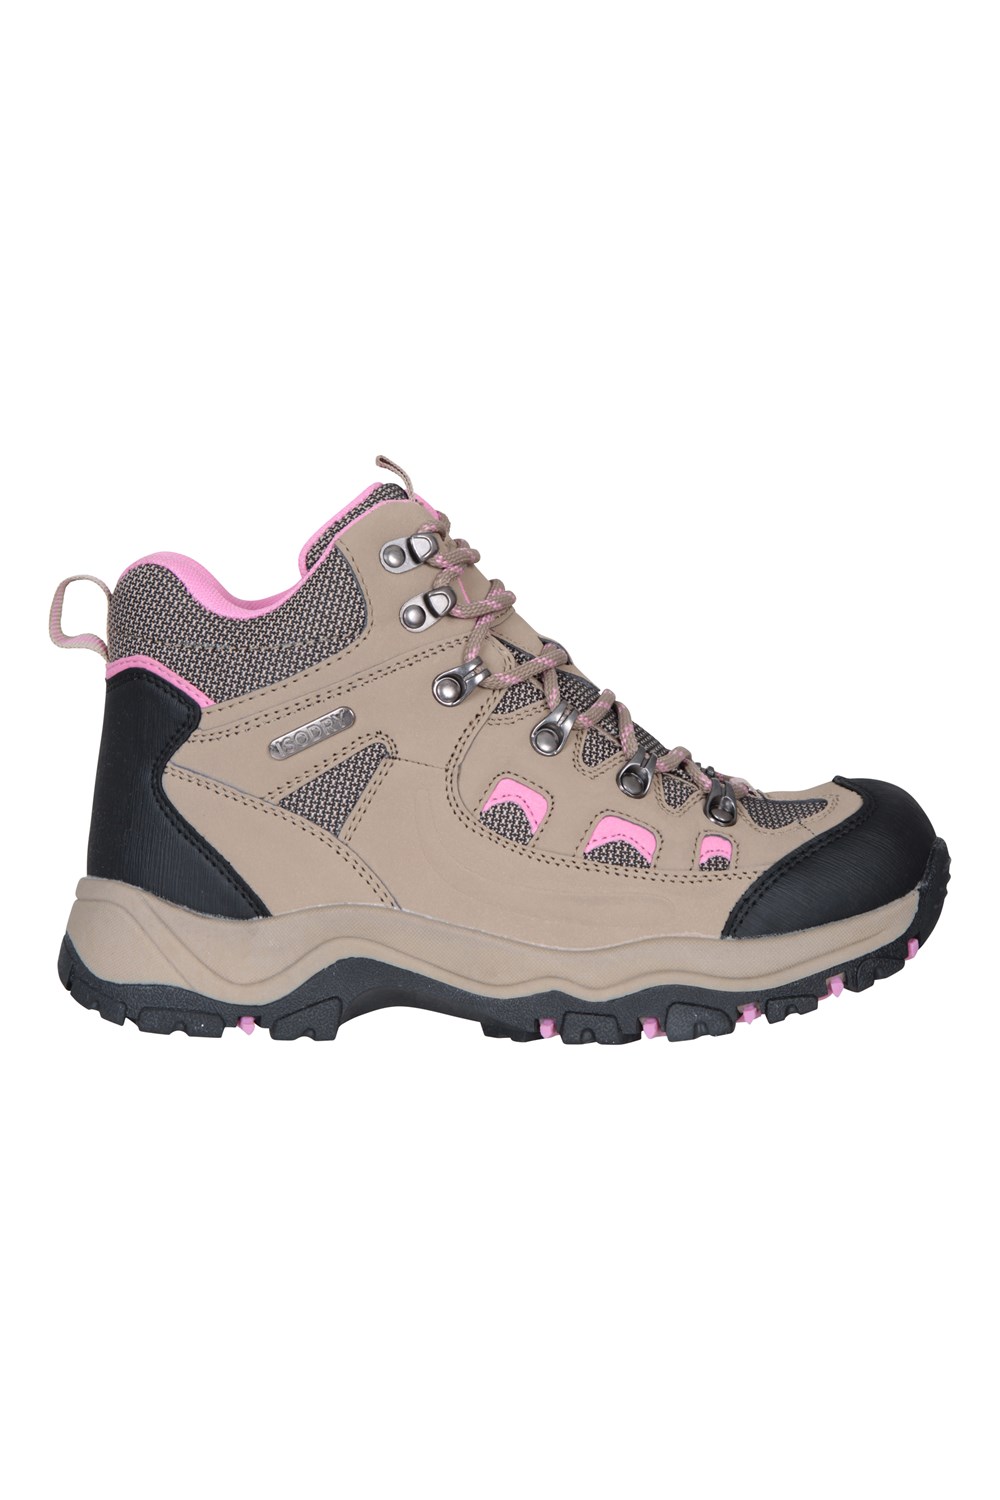 miniature 14 - Mountain Warehouse Womens Waterproof Hiking Boots Walking Trekking Ladies Boot